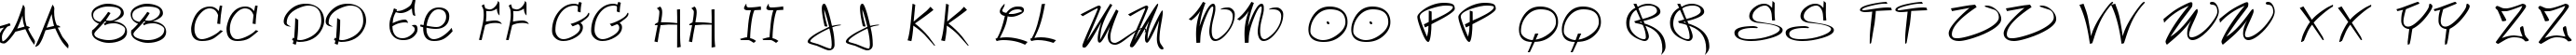 Пример написания английского алфавита шрифтом Wildstyle